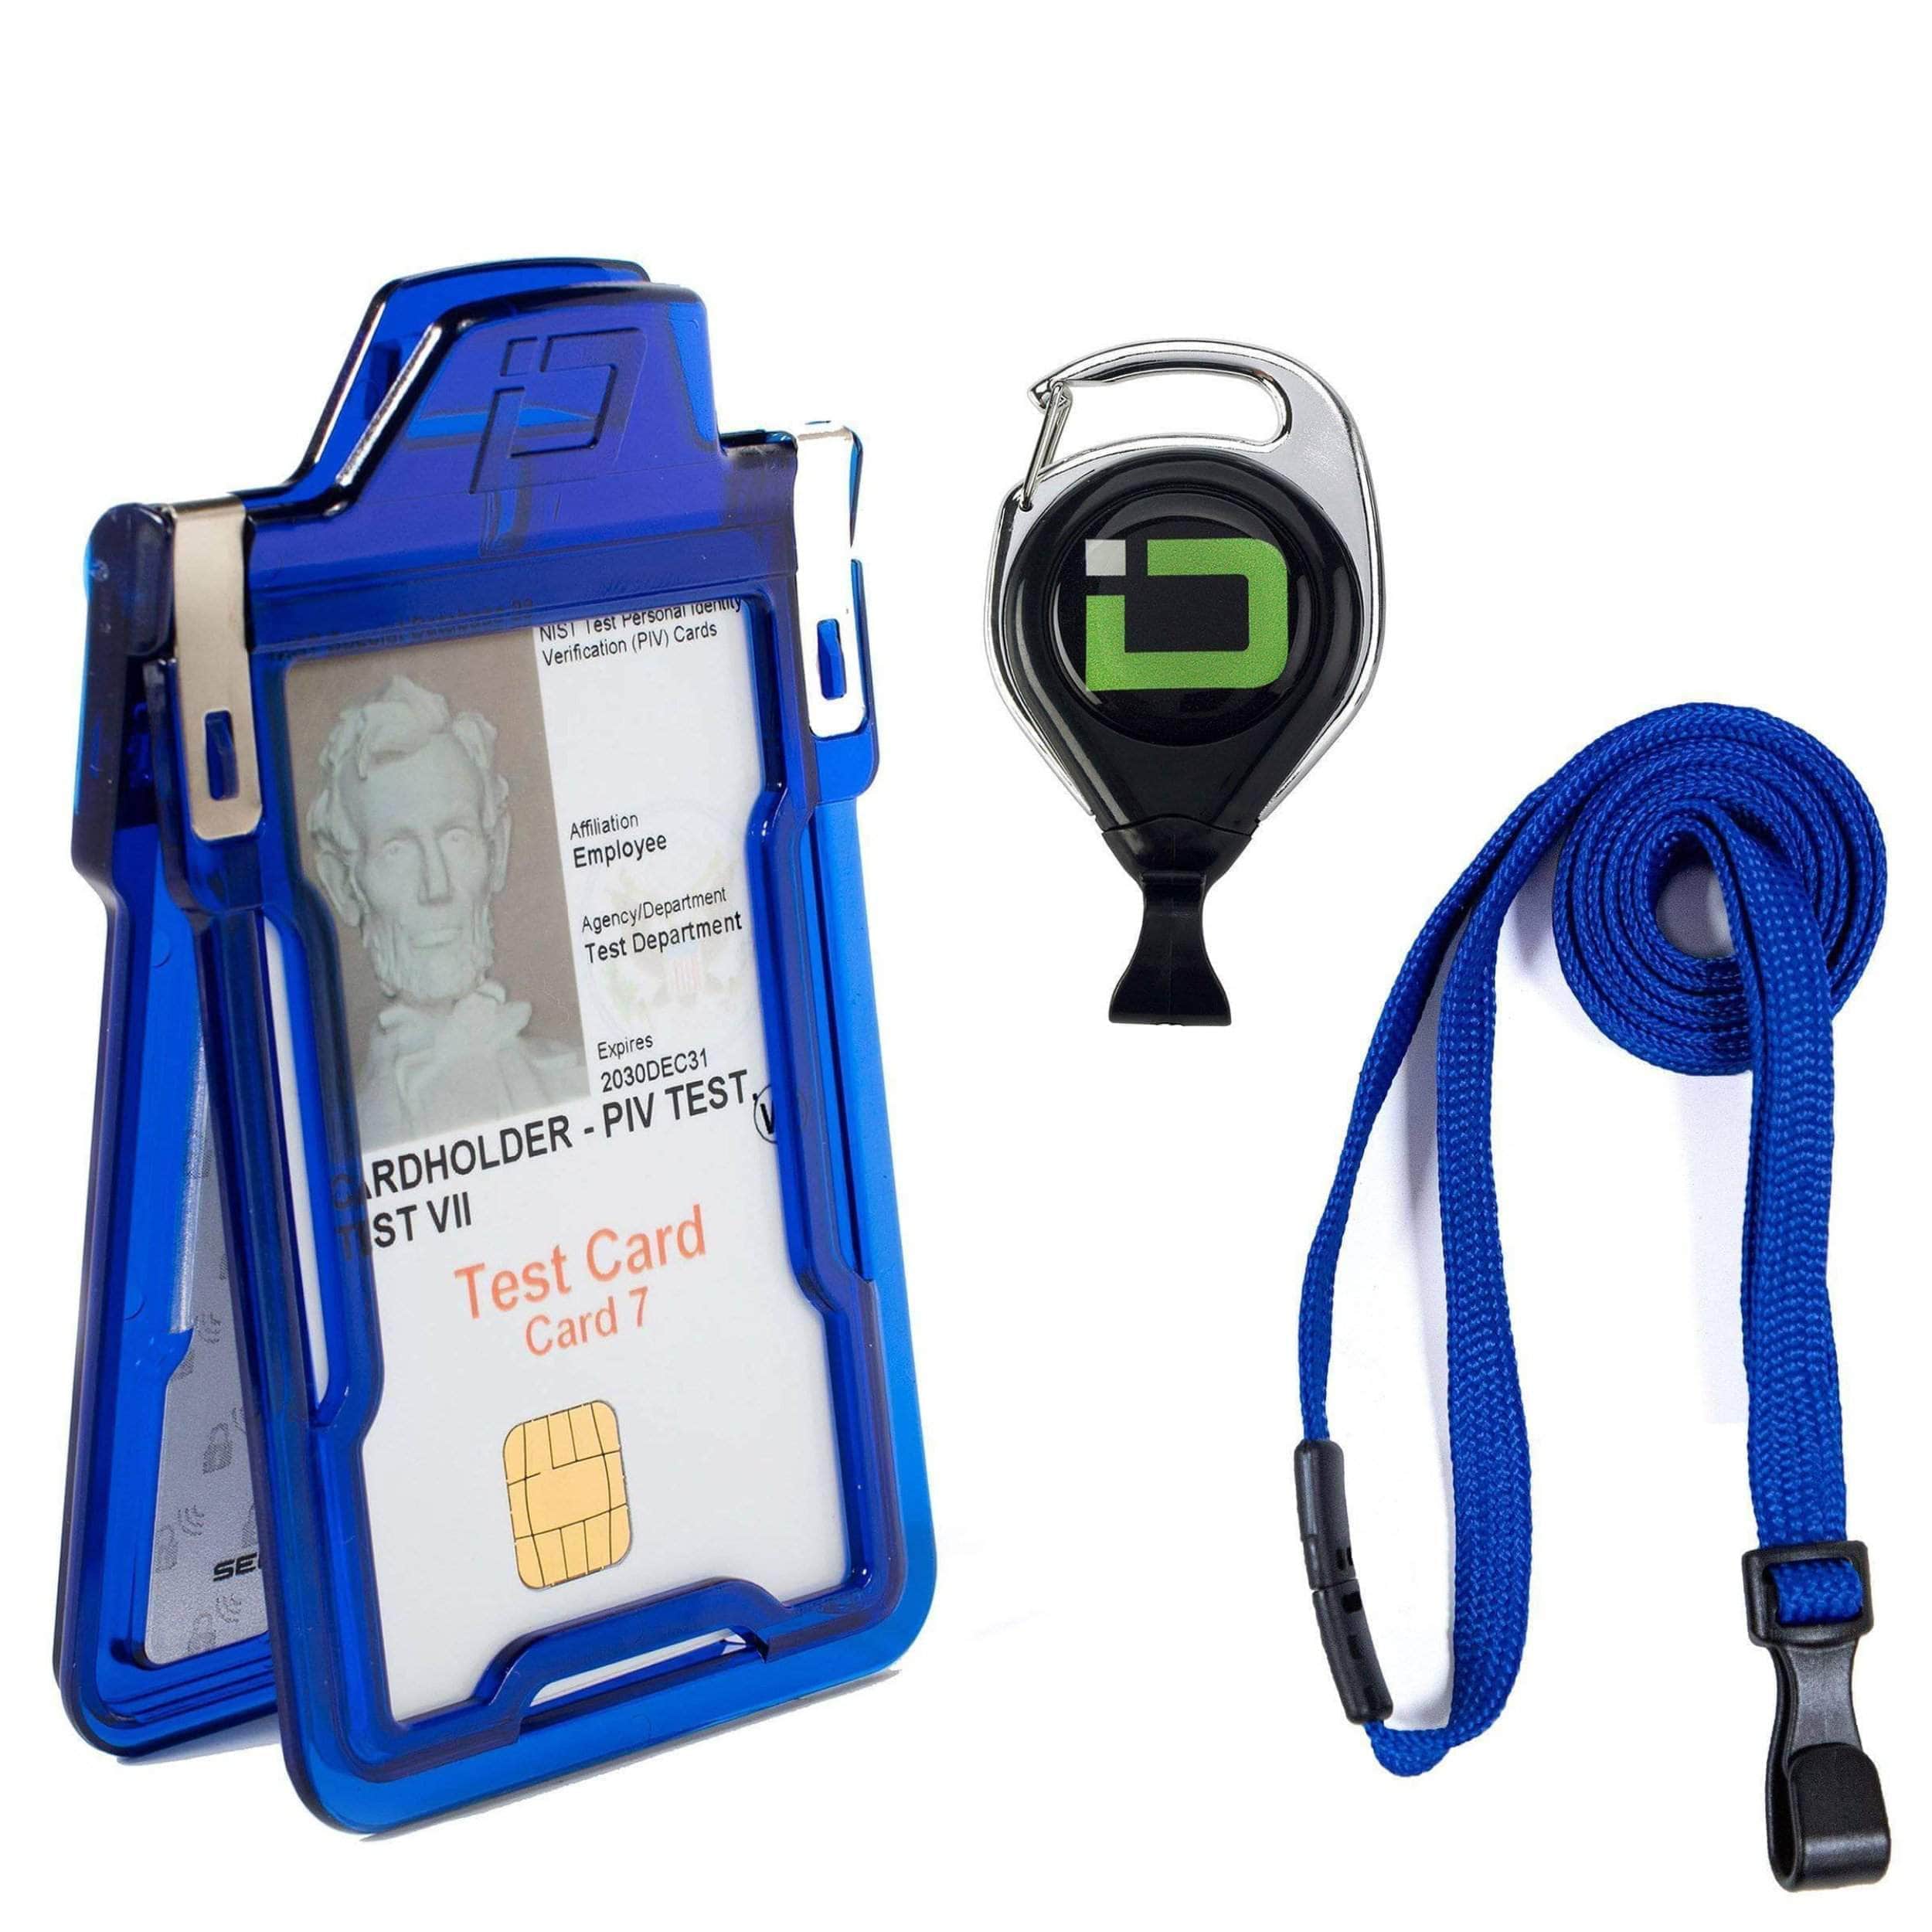 ID Stronghold Badgeholder Blue Secure Badge Holder Classic, Vertical 1 Card Holder, Retractable Reel, and Lanyard Bundle